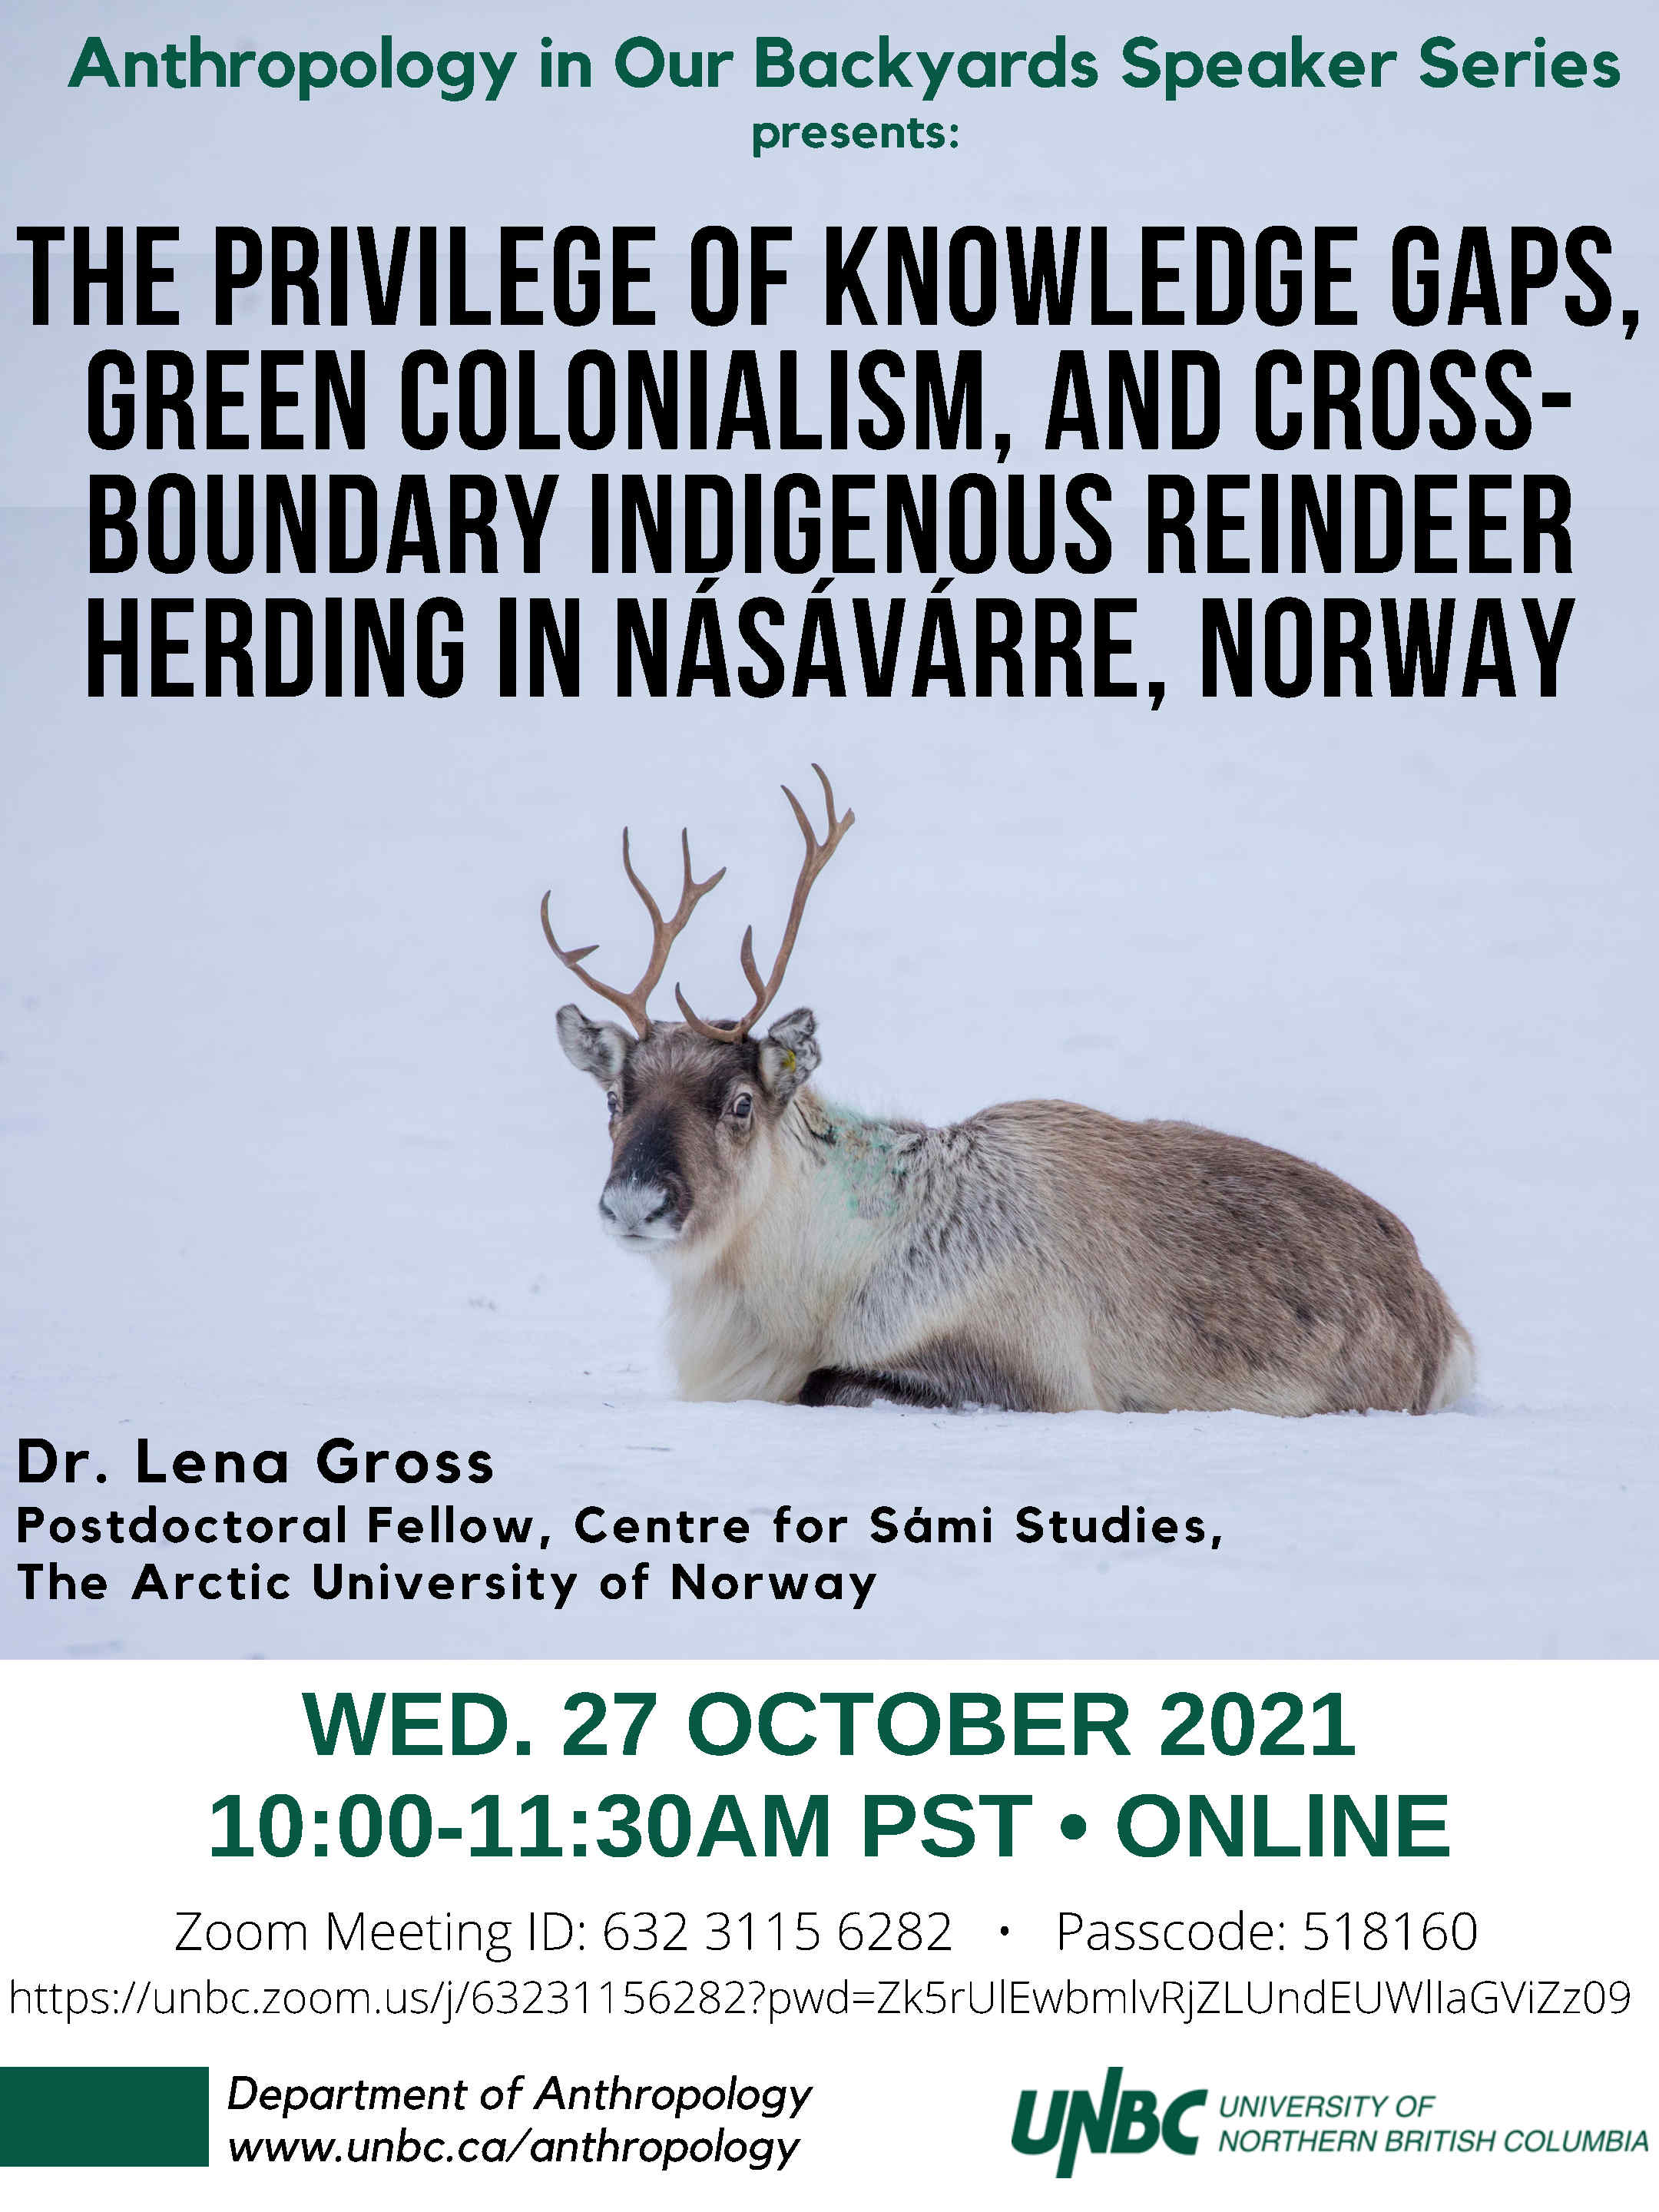 Dr. Lena Gross, Postdoctoral Fellow, Centre for Sami Studies